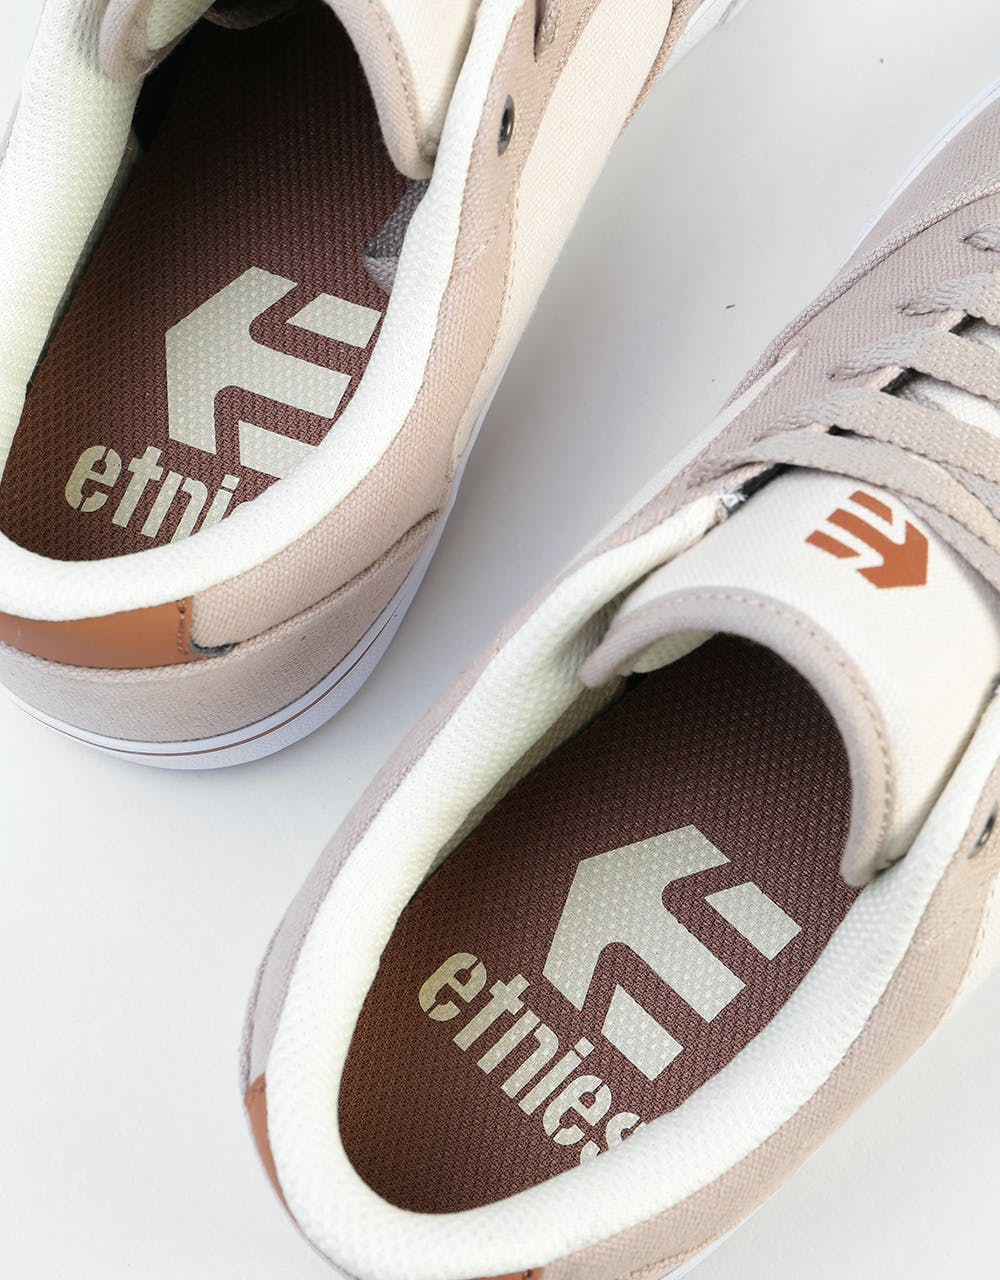 Etnies Blitz Skate Shoes - Brown/Tan